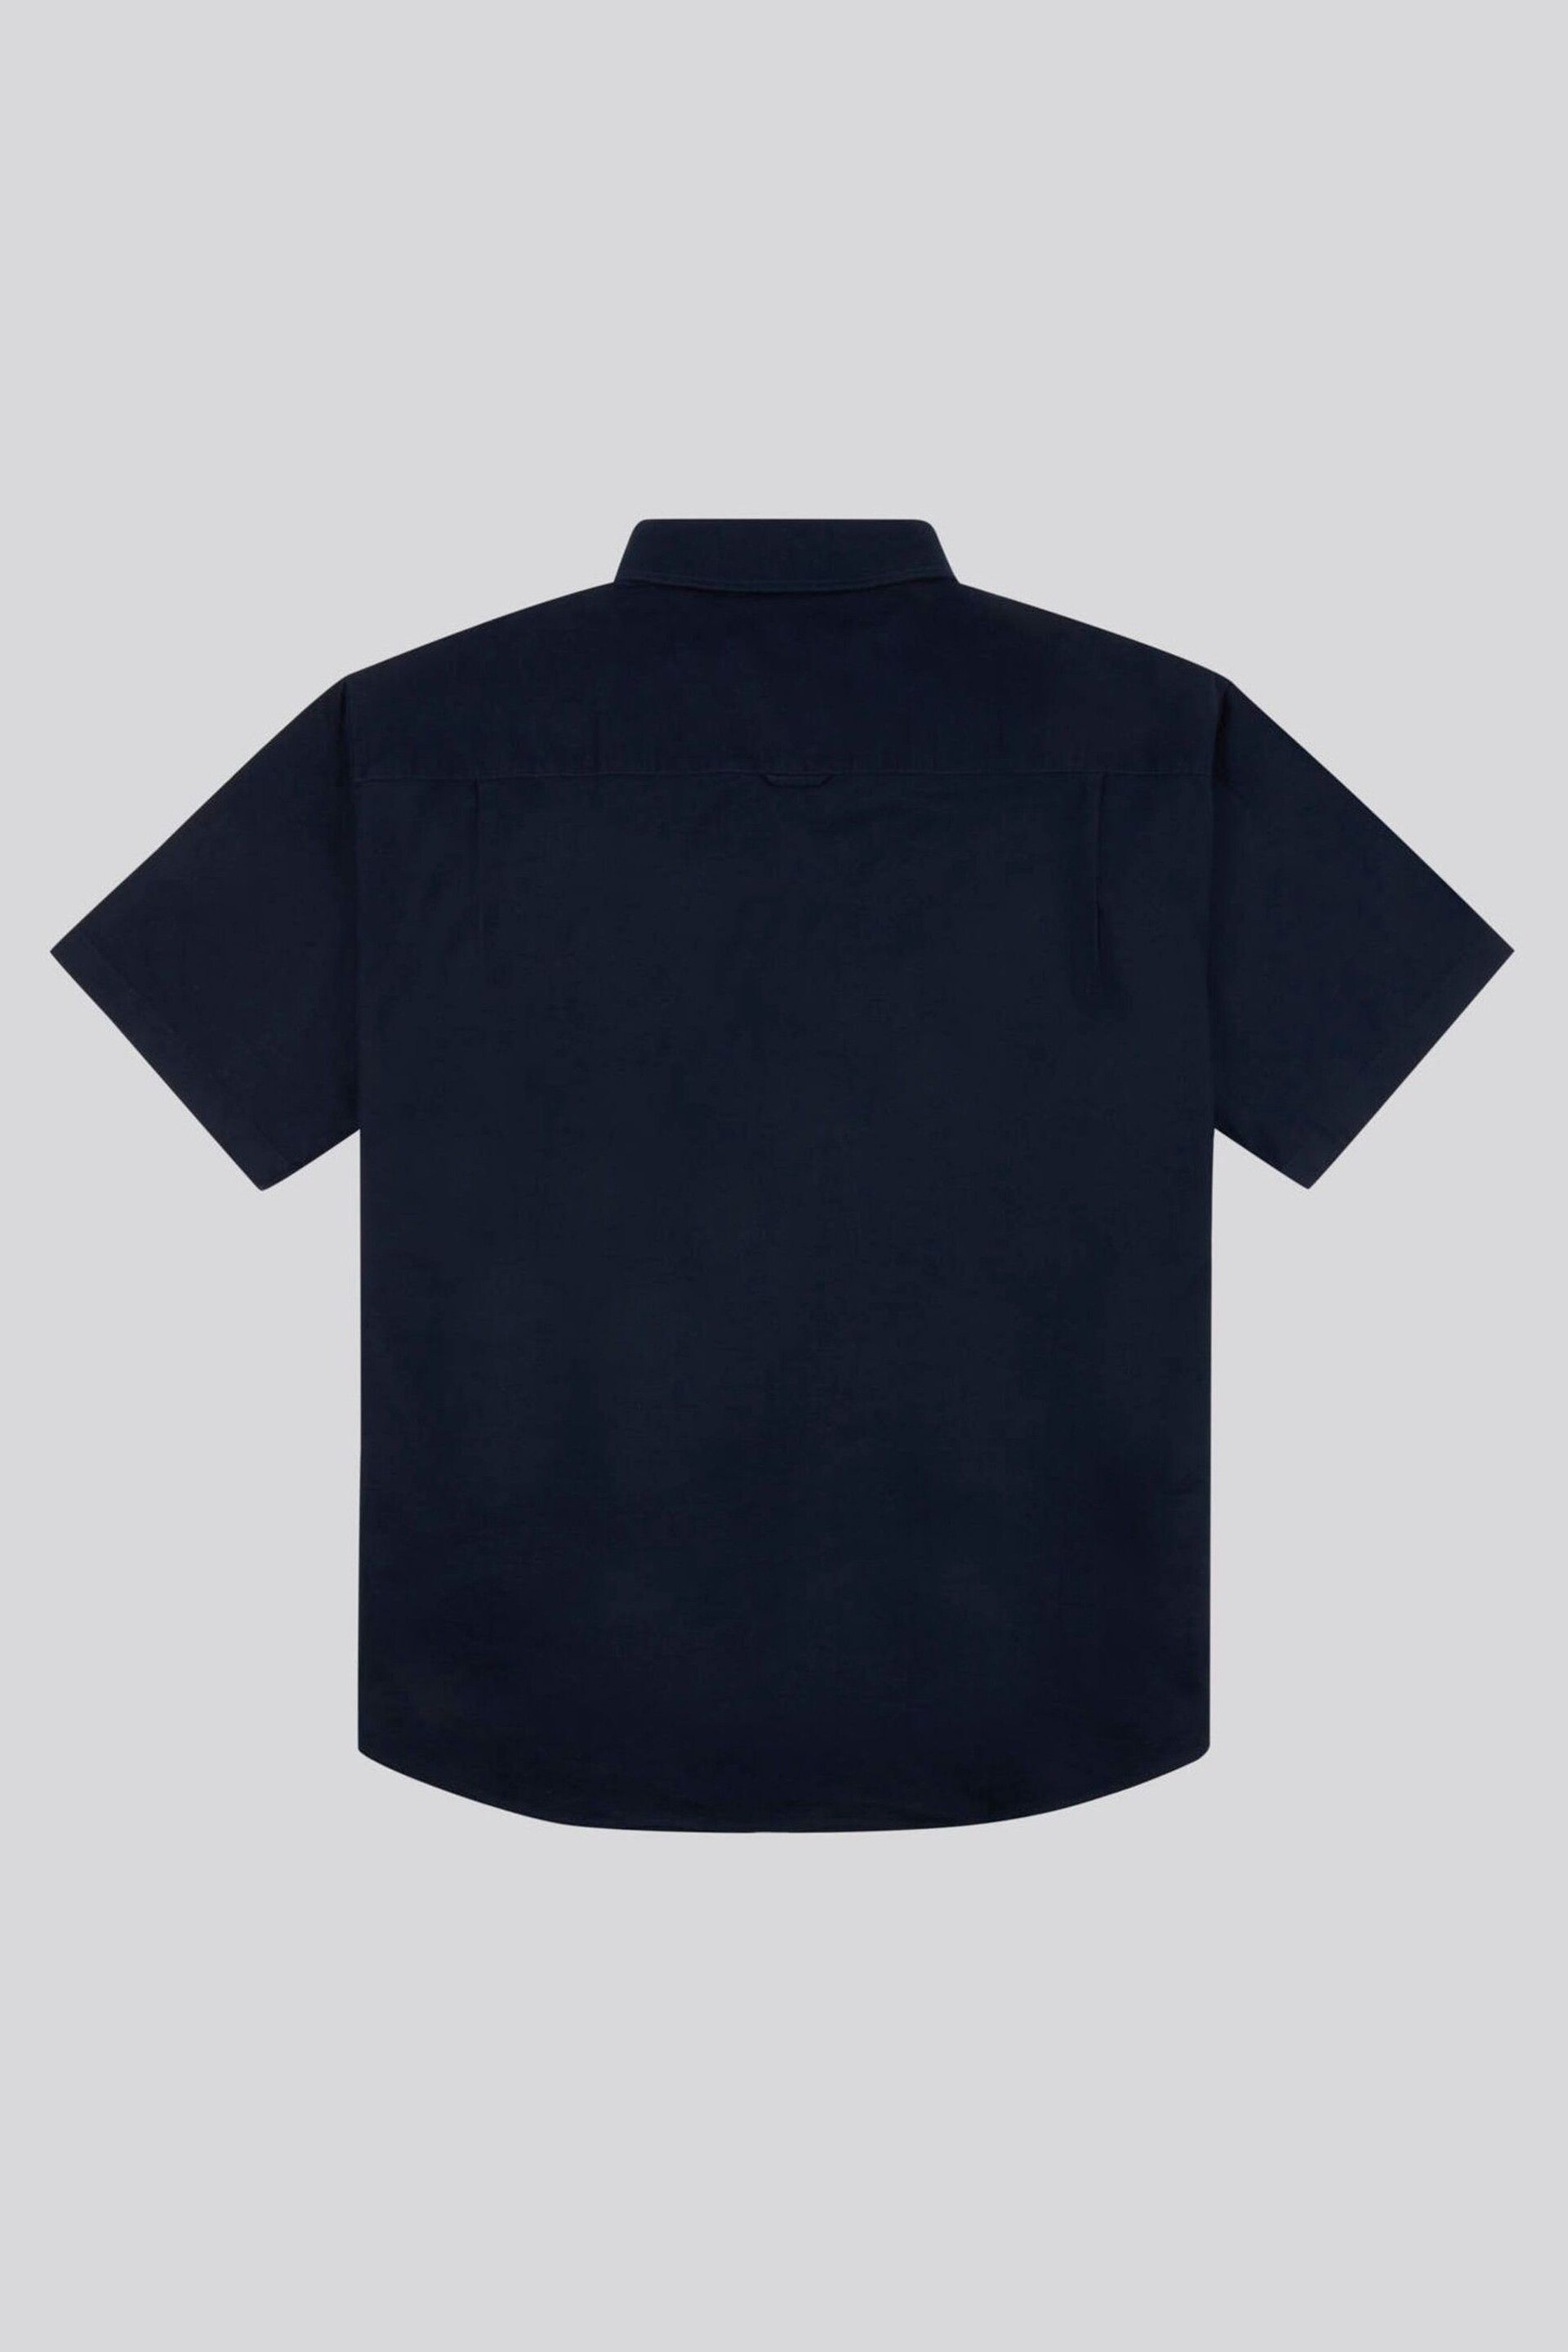 U.S. Polo Assn. Mens Blue Big & Tall Short Sleeve Oxford Shirt - Image 6 of 7